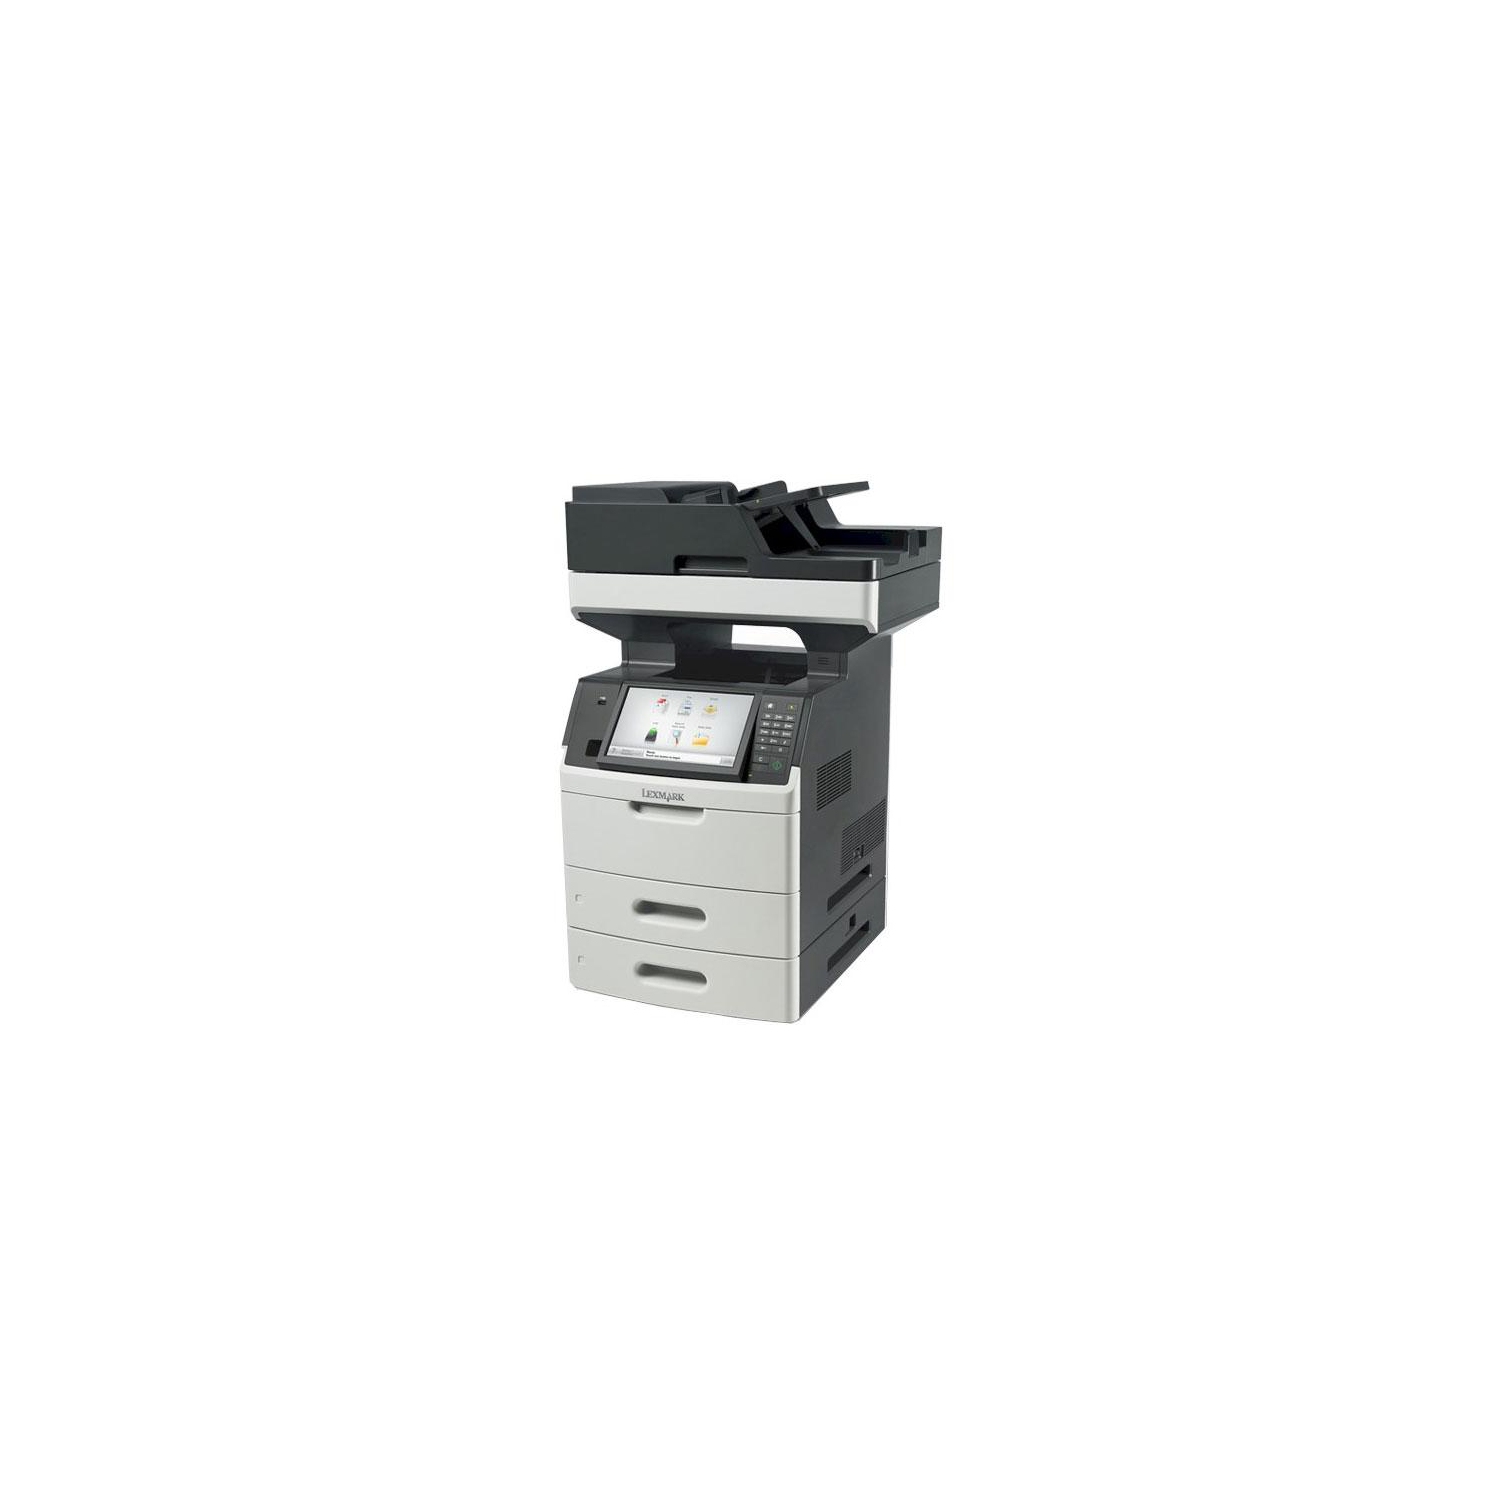 Refurbished (Good) Lexmark MX711de MX711 24T7404 Laser Printer Copier Scanner Fax All-in-One Machine with 90-day Warranty